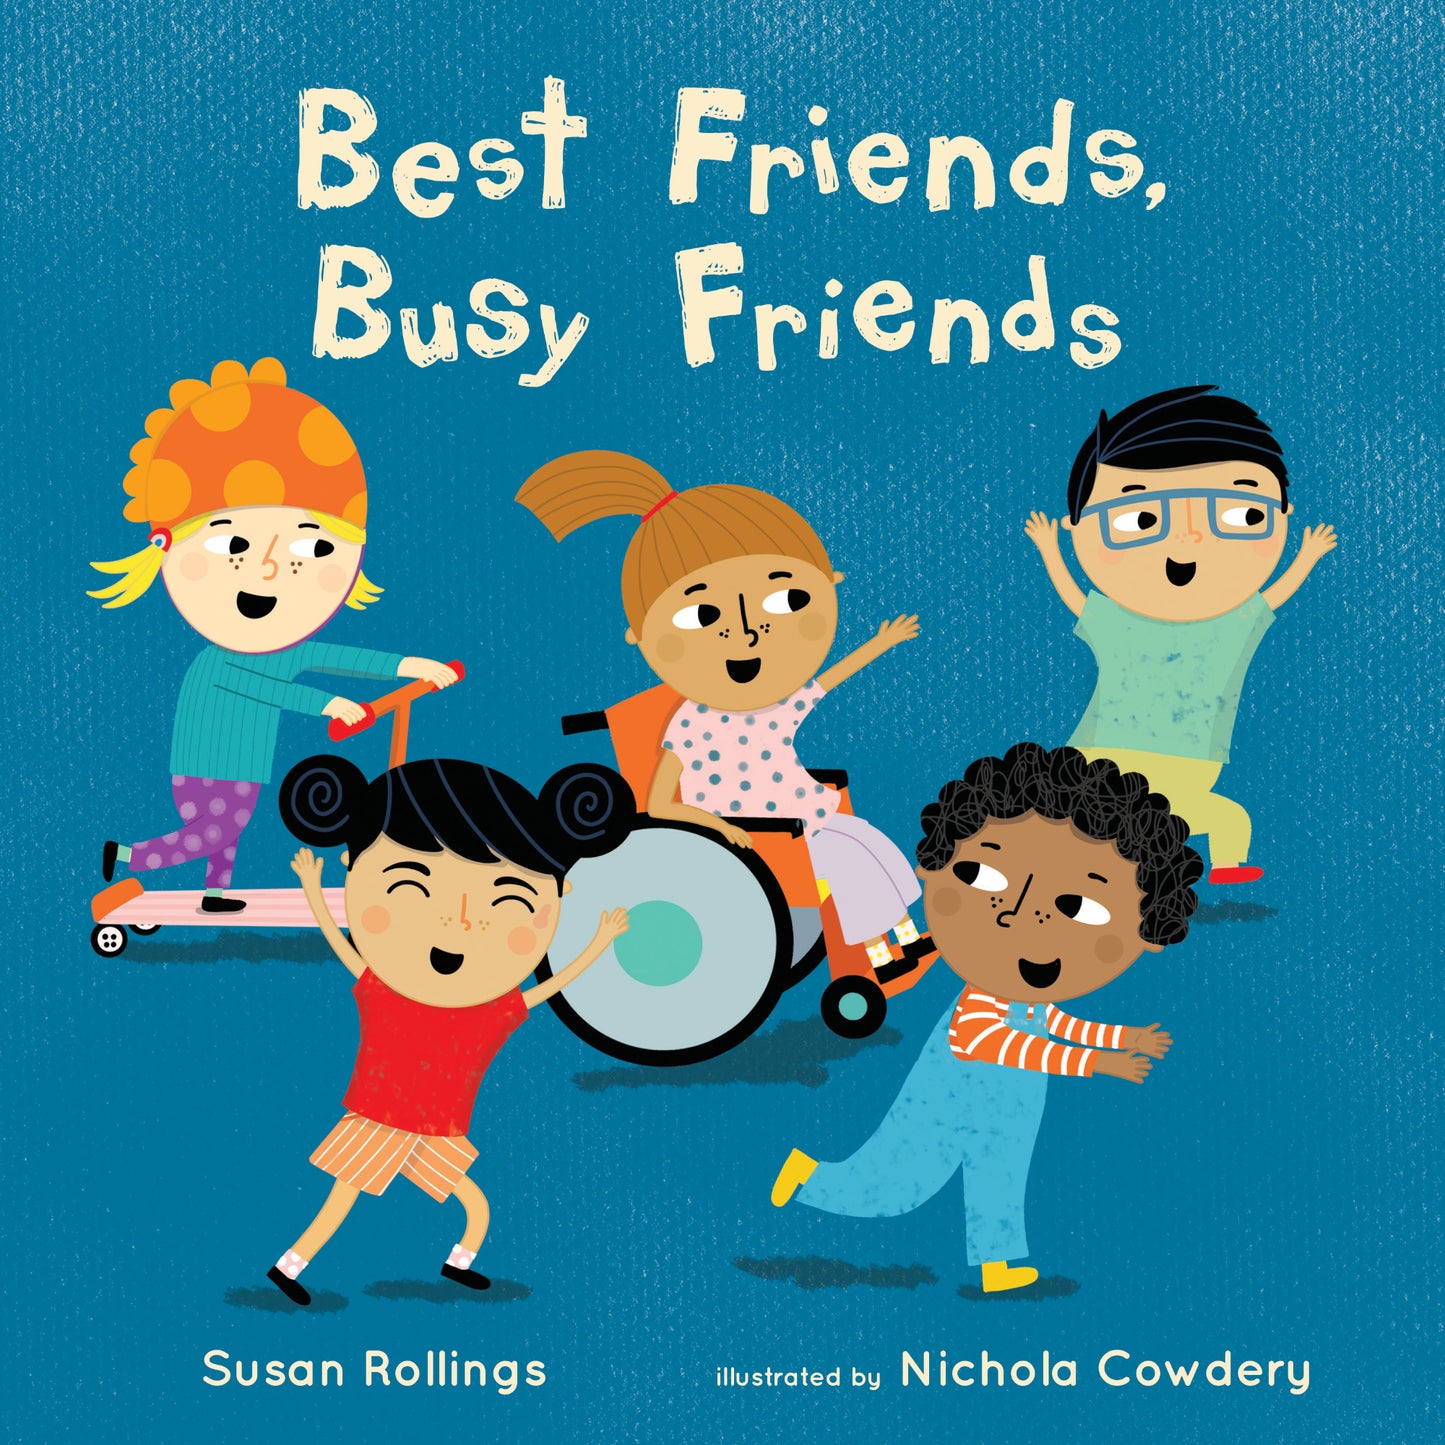 Best Friends, Busy Friends 8x8 edition